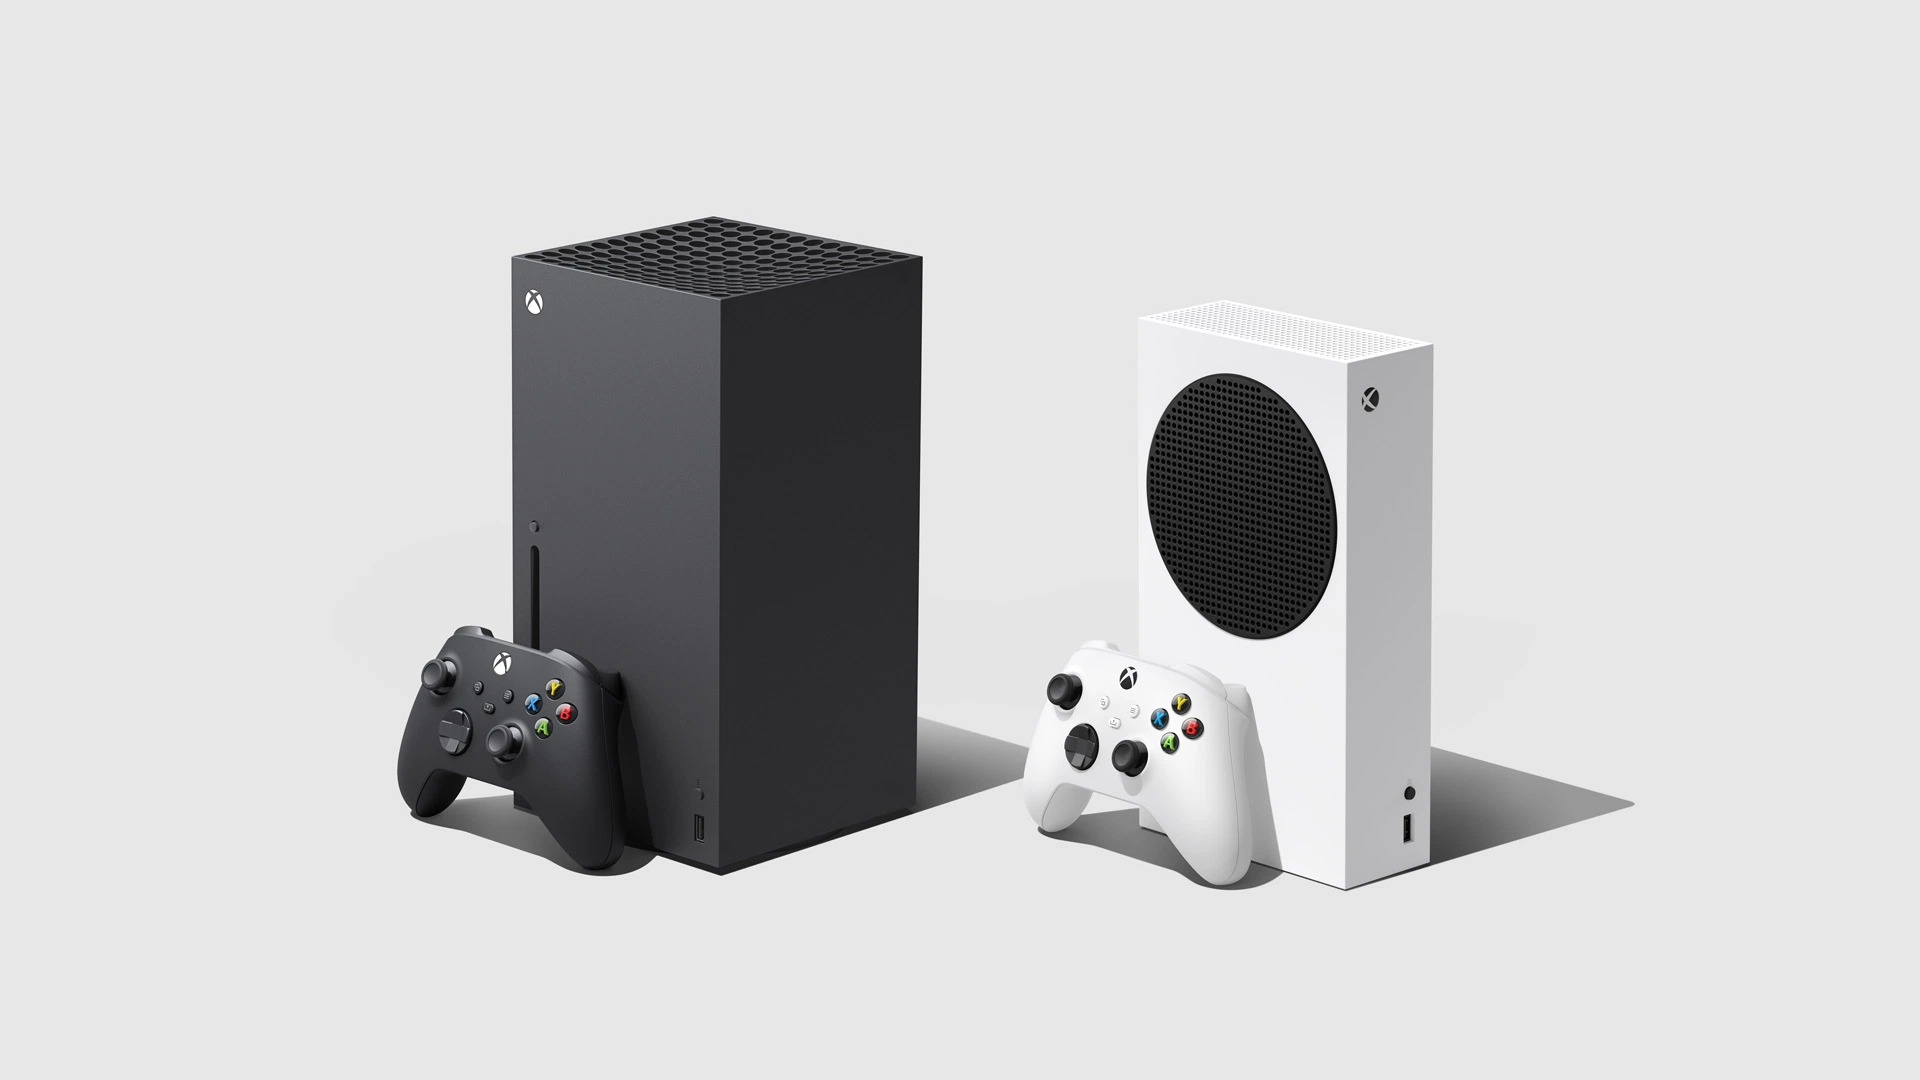 ｢Xbox Series X｣と｢Xbox Series S｣は国内でも11月10日に発売へ − 9月25日より予約受付開始